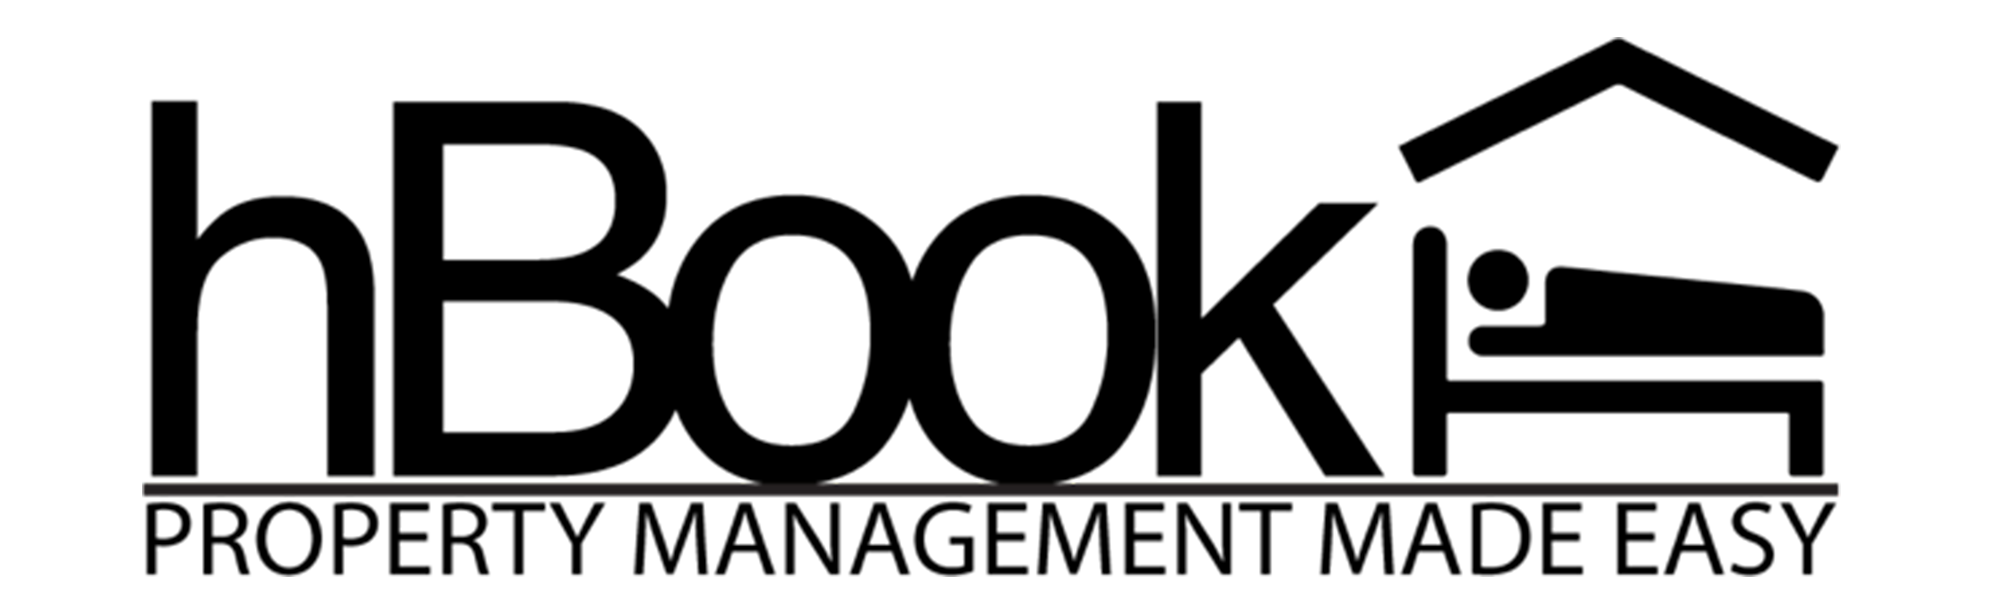 Logo_hBook_2000x596